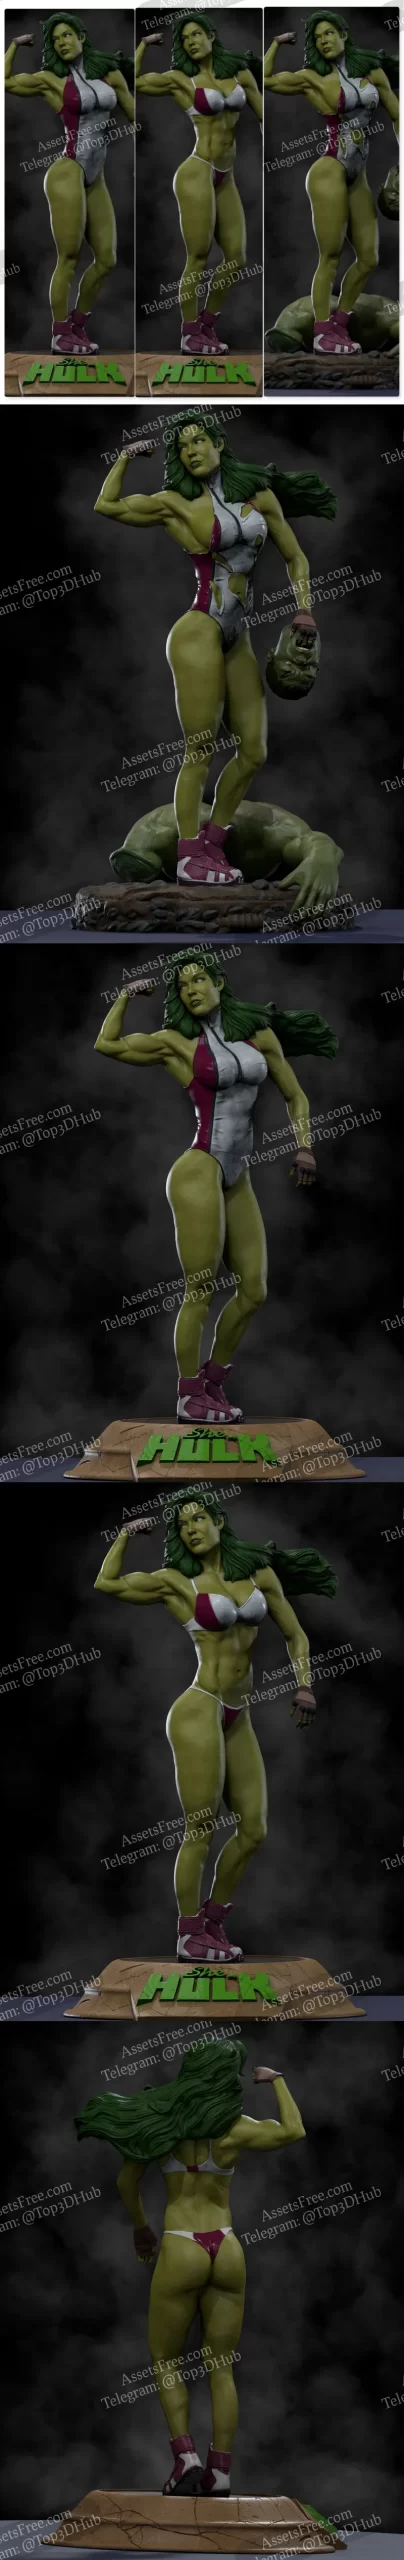 She-Hulk - 3 Model